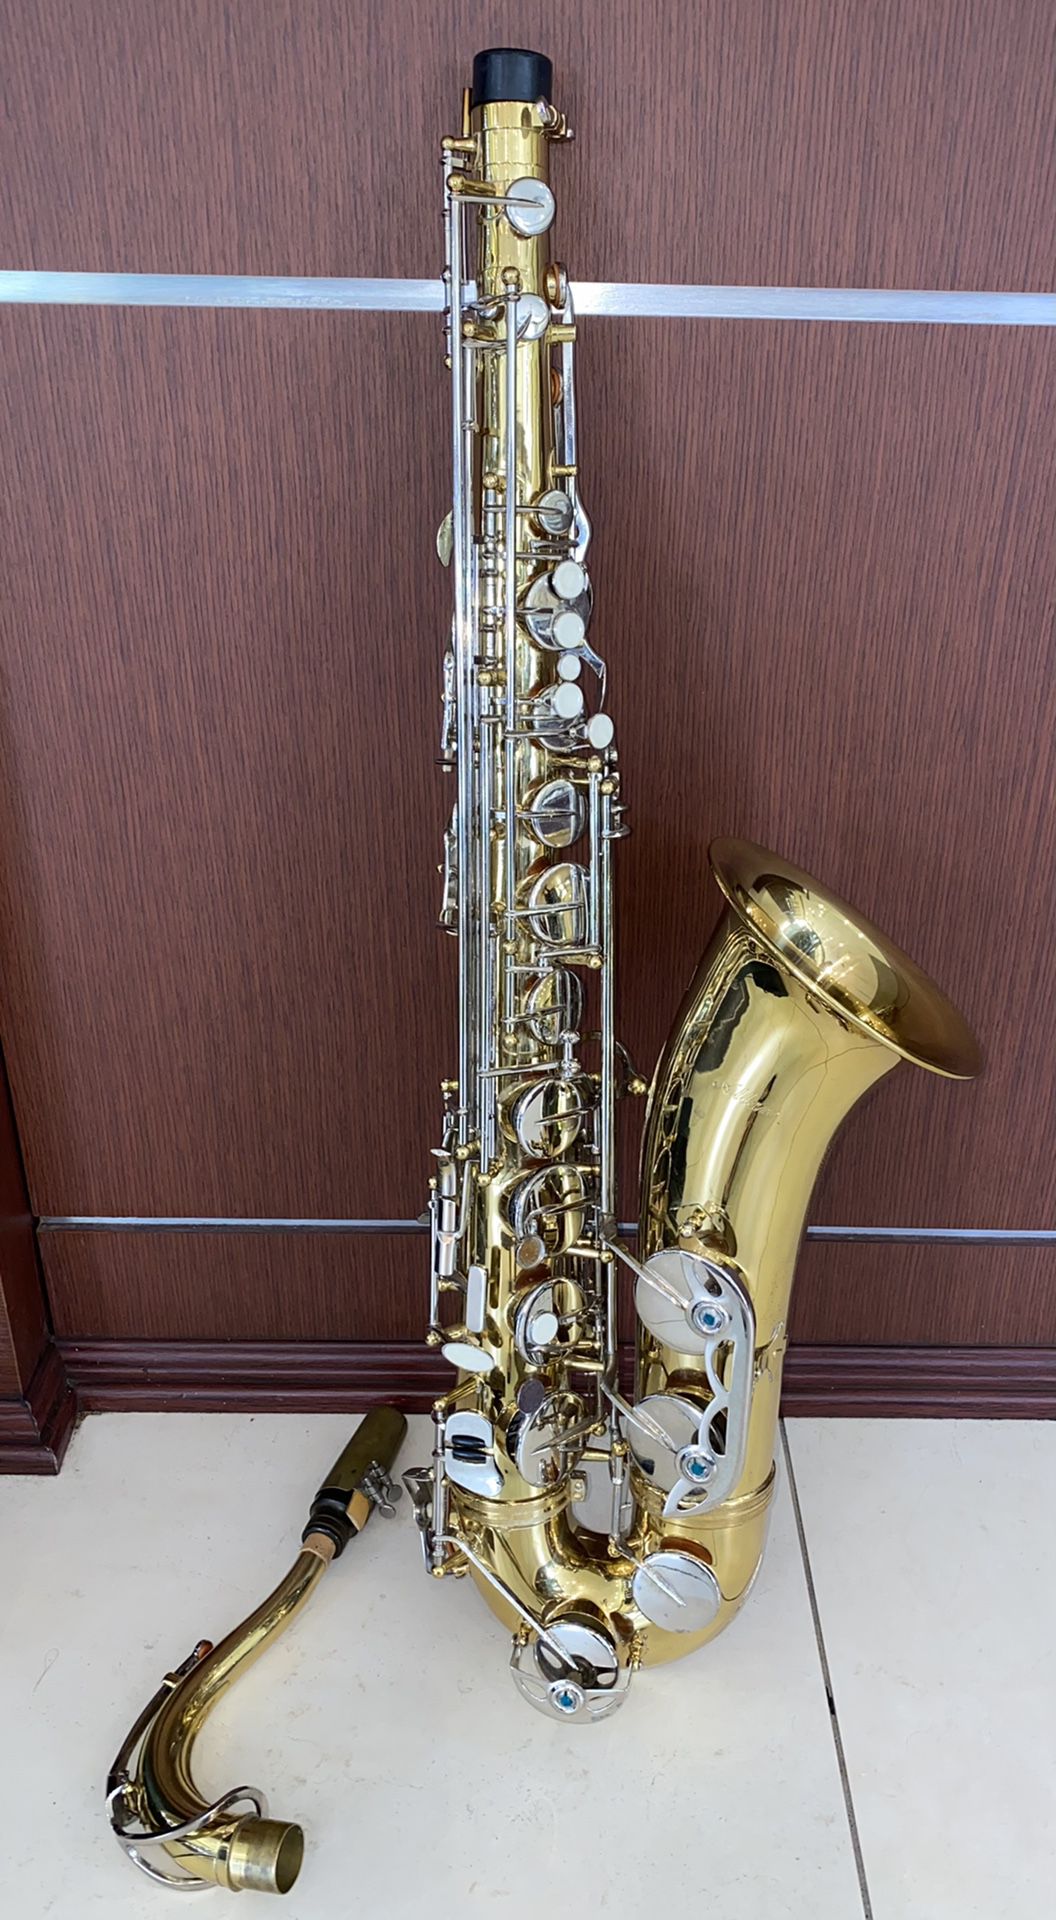 Allan Student Saxophone